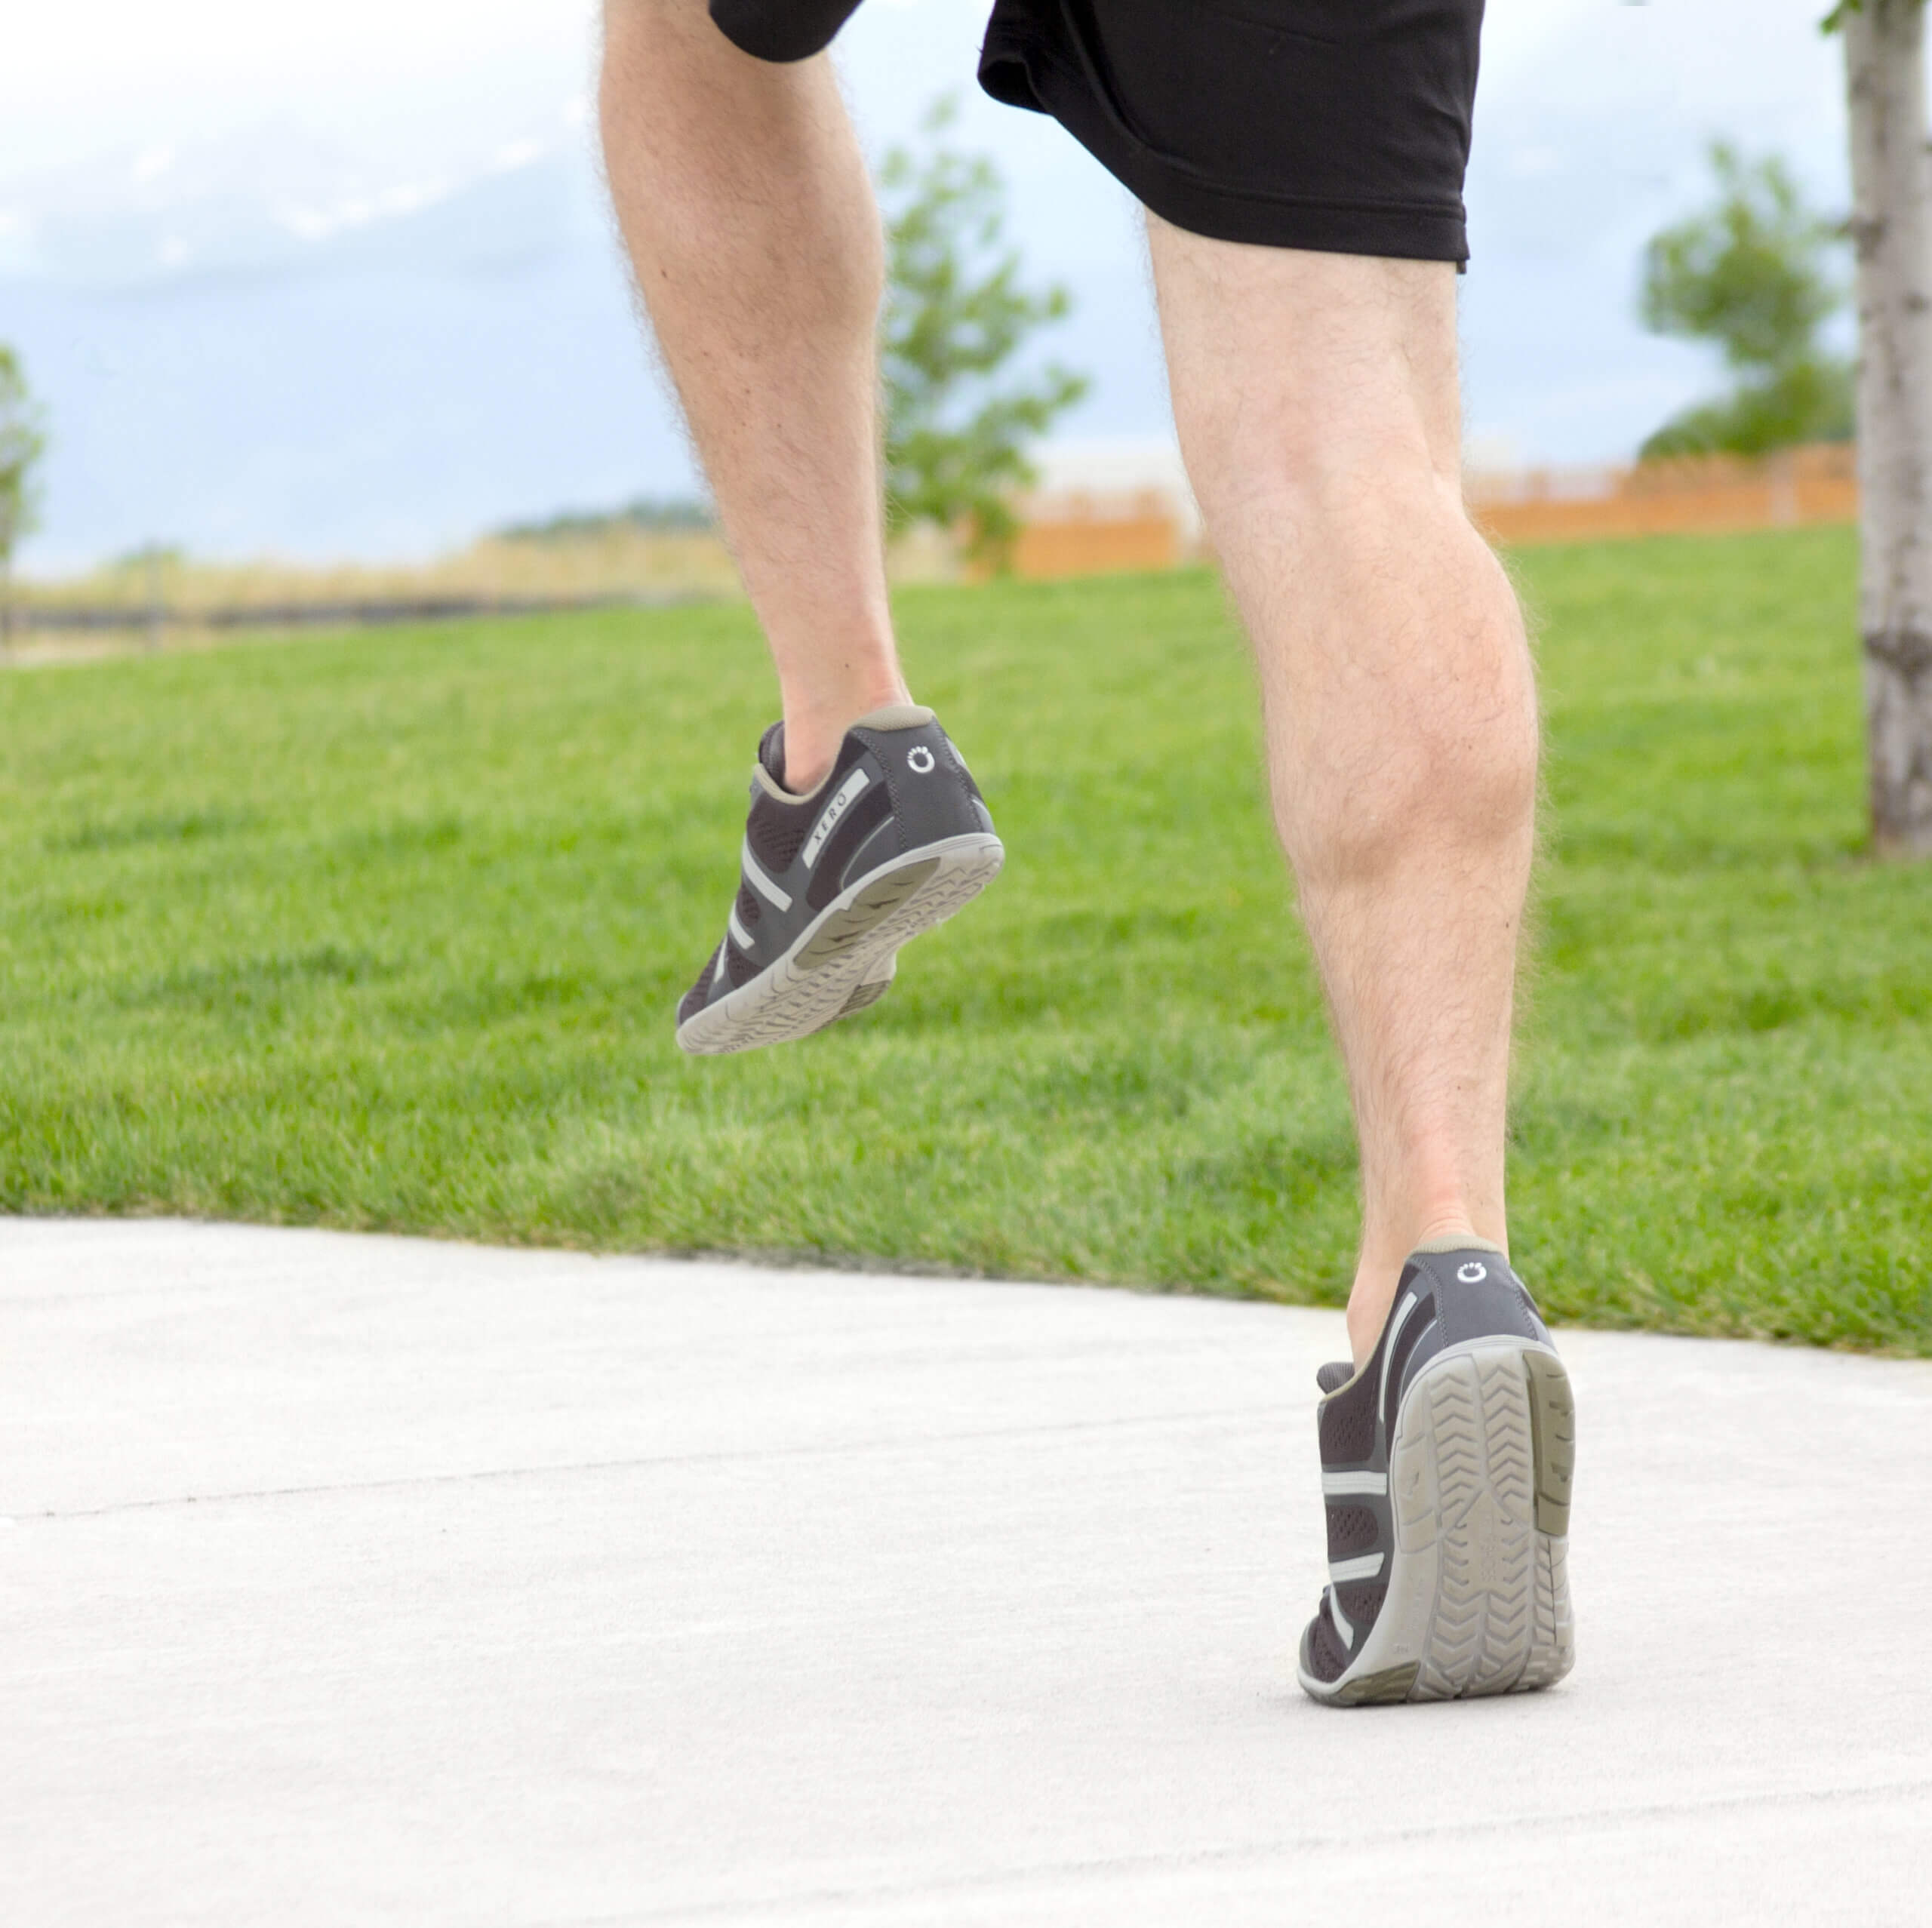 2 Rules For Beginning Barefoot Running (And Avoiding Injury